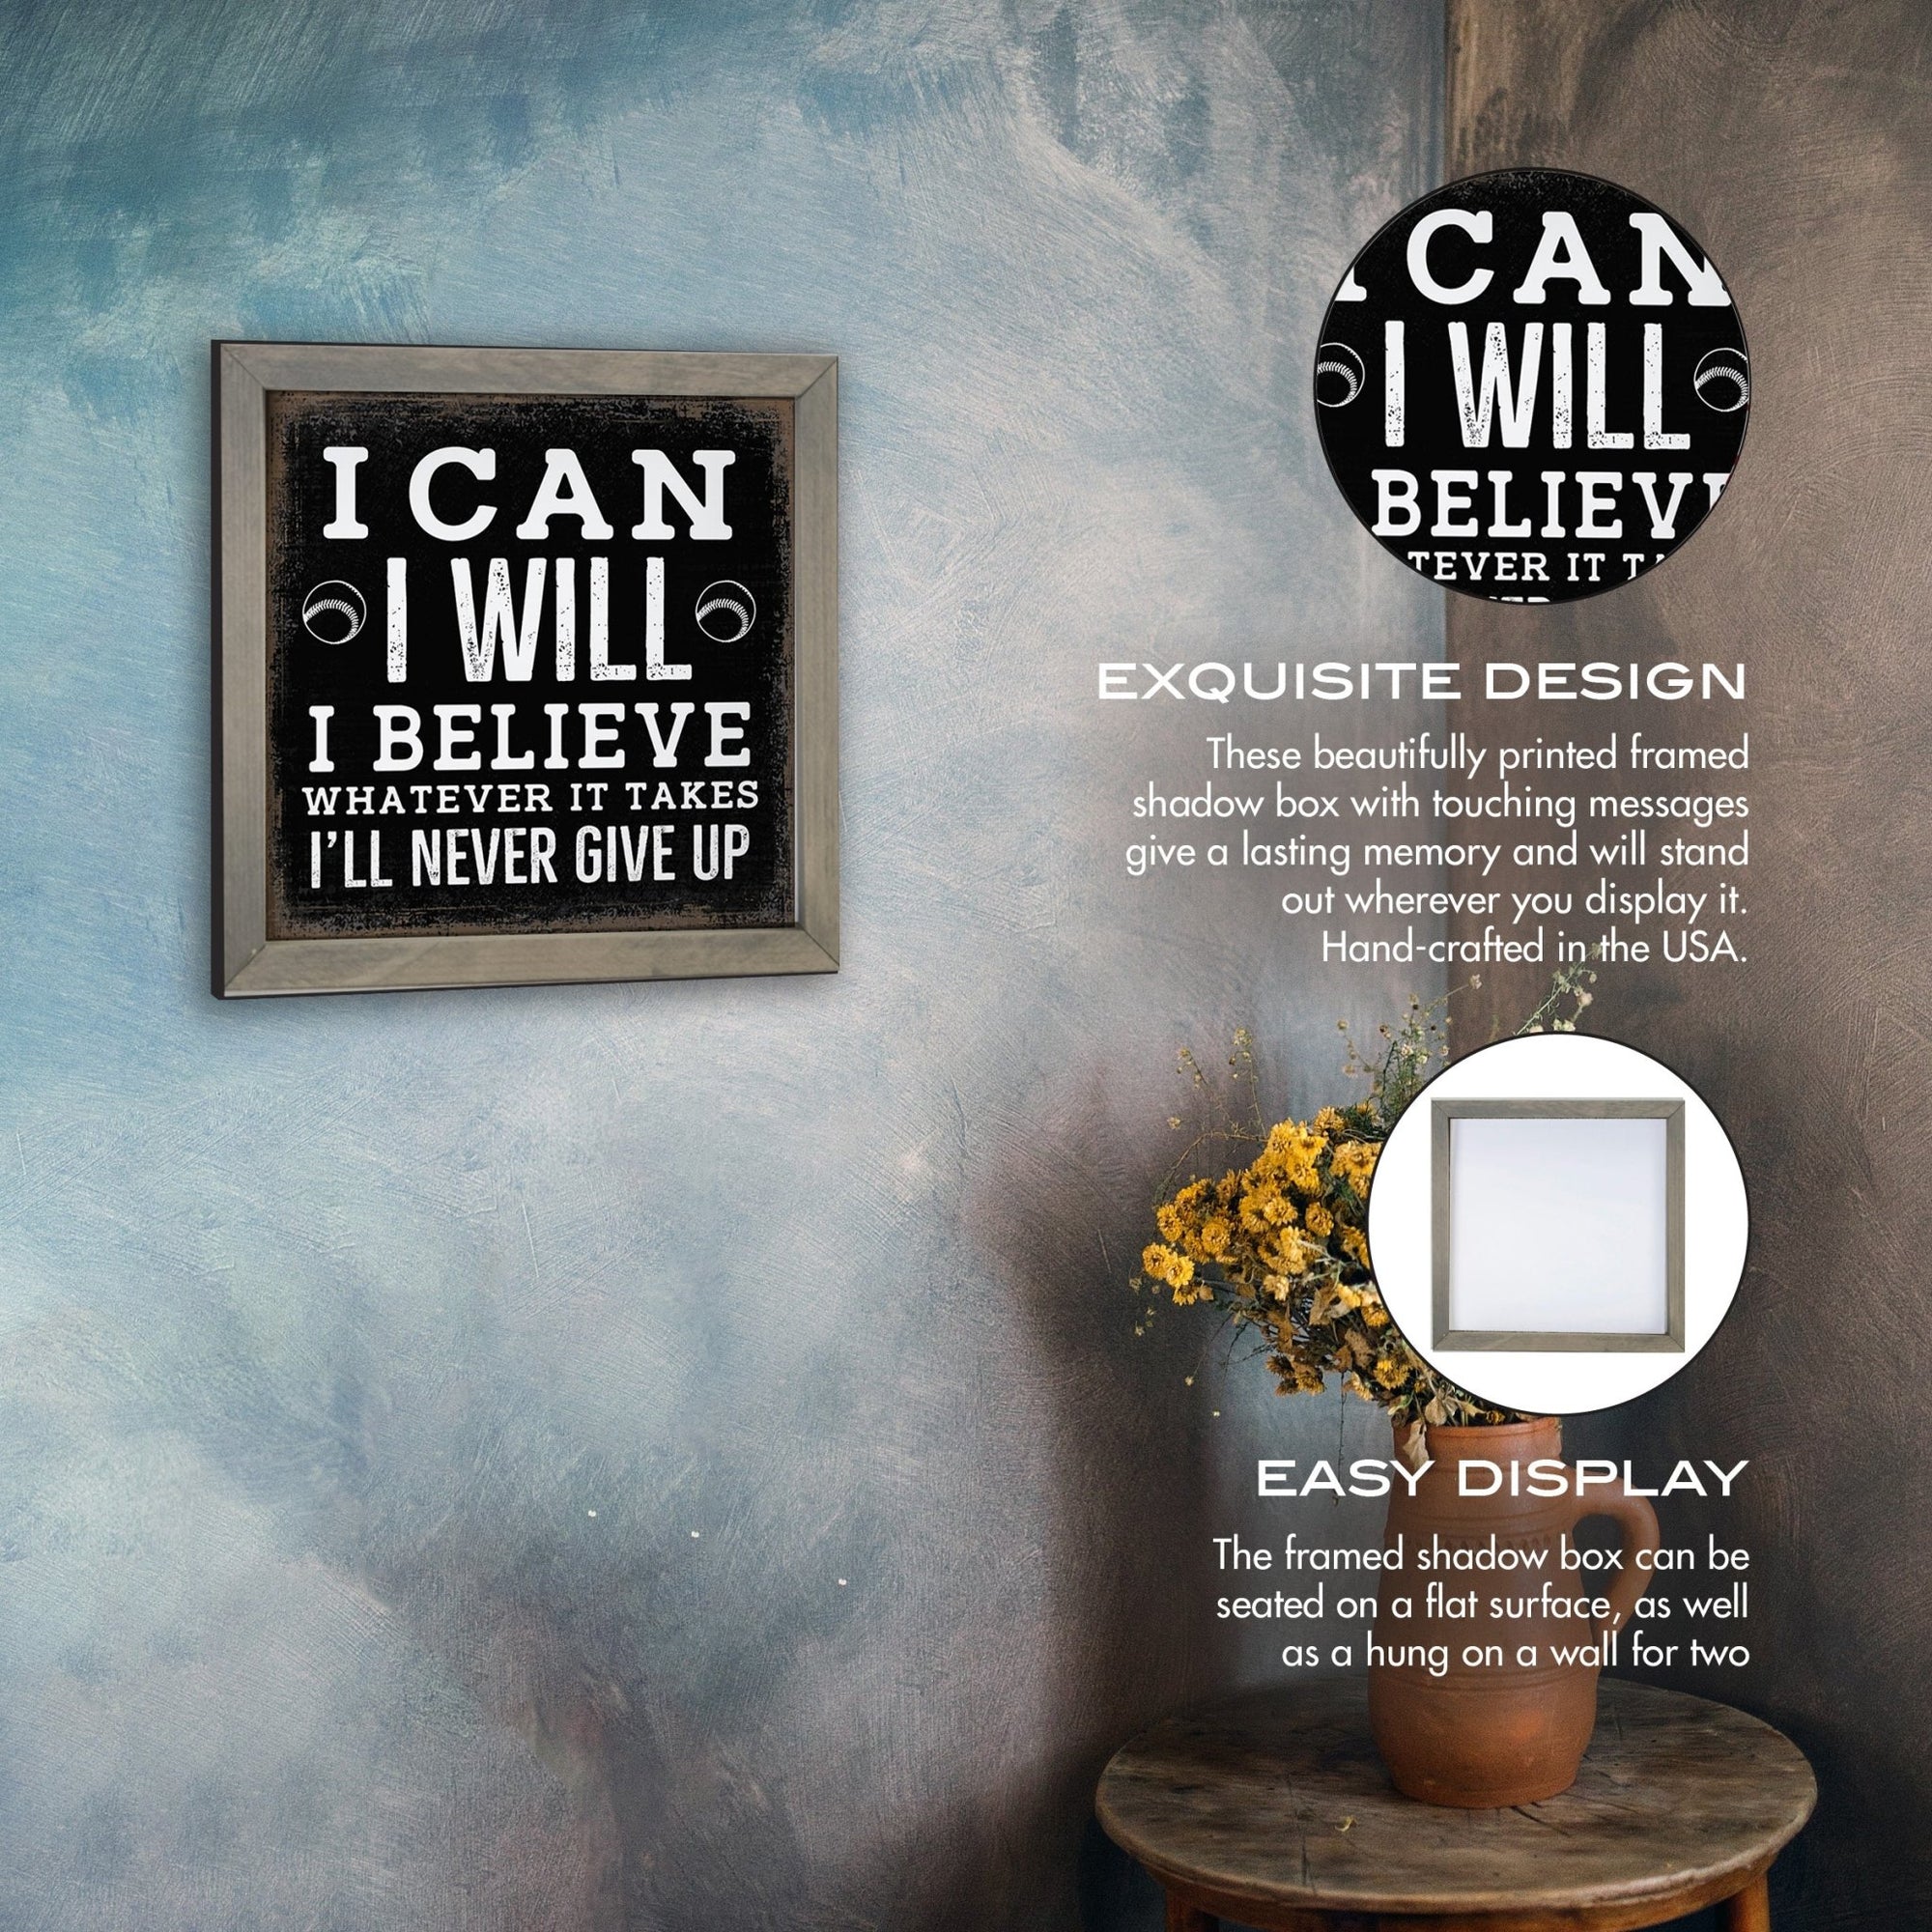 Elegant Baseball Framed Shadow Box Shelf Décor With Inspiring Bible Verses - I Can, I Will - LifeSong Milestones